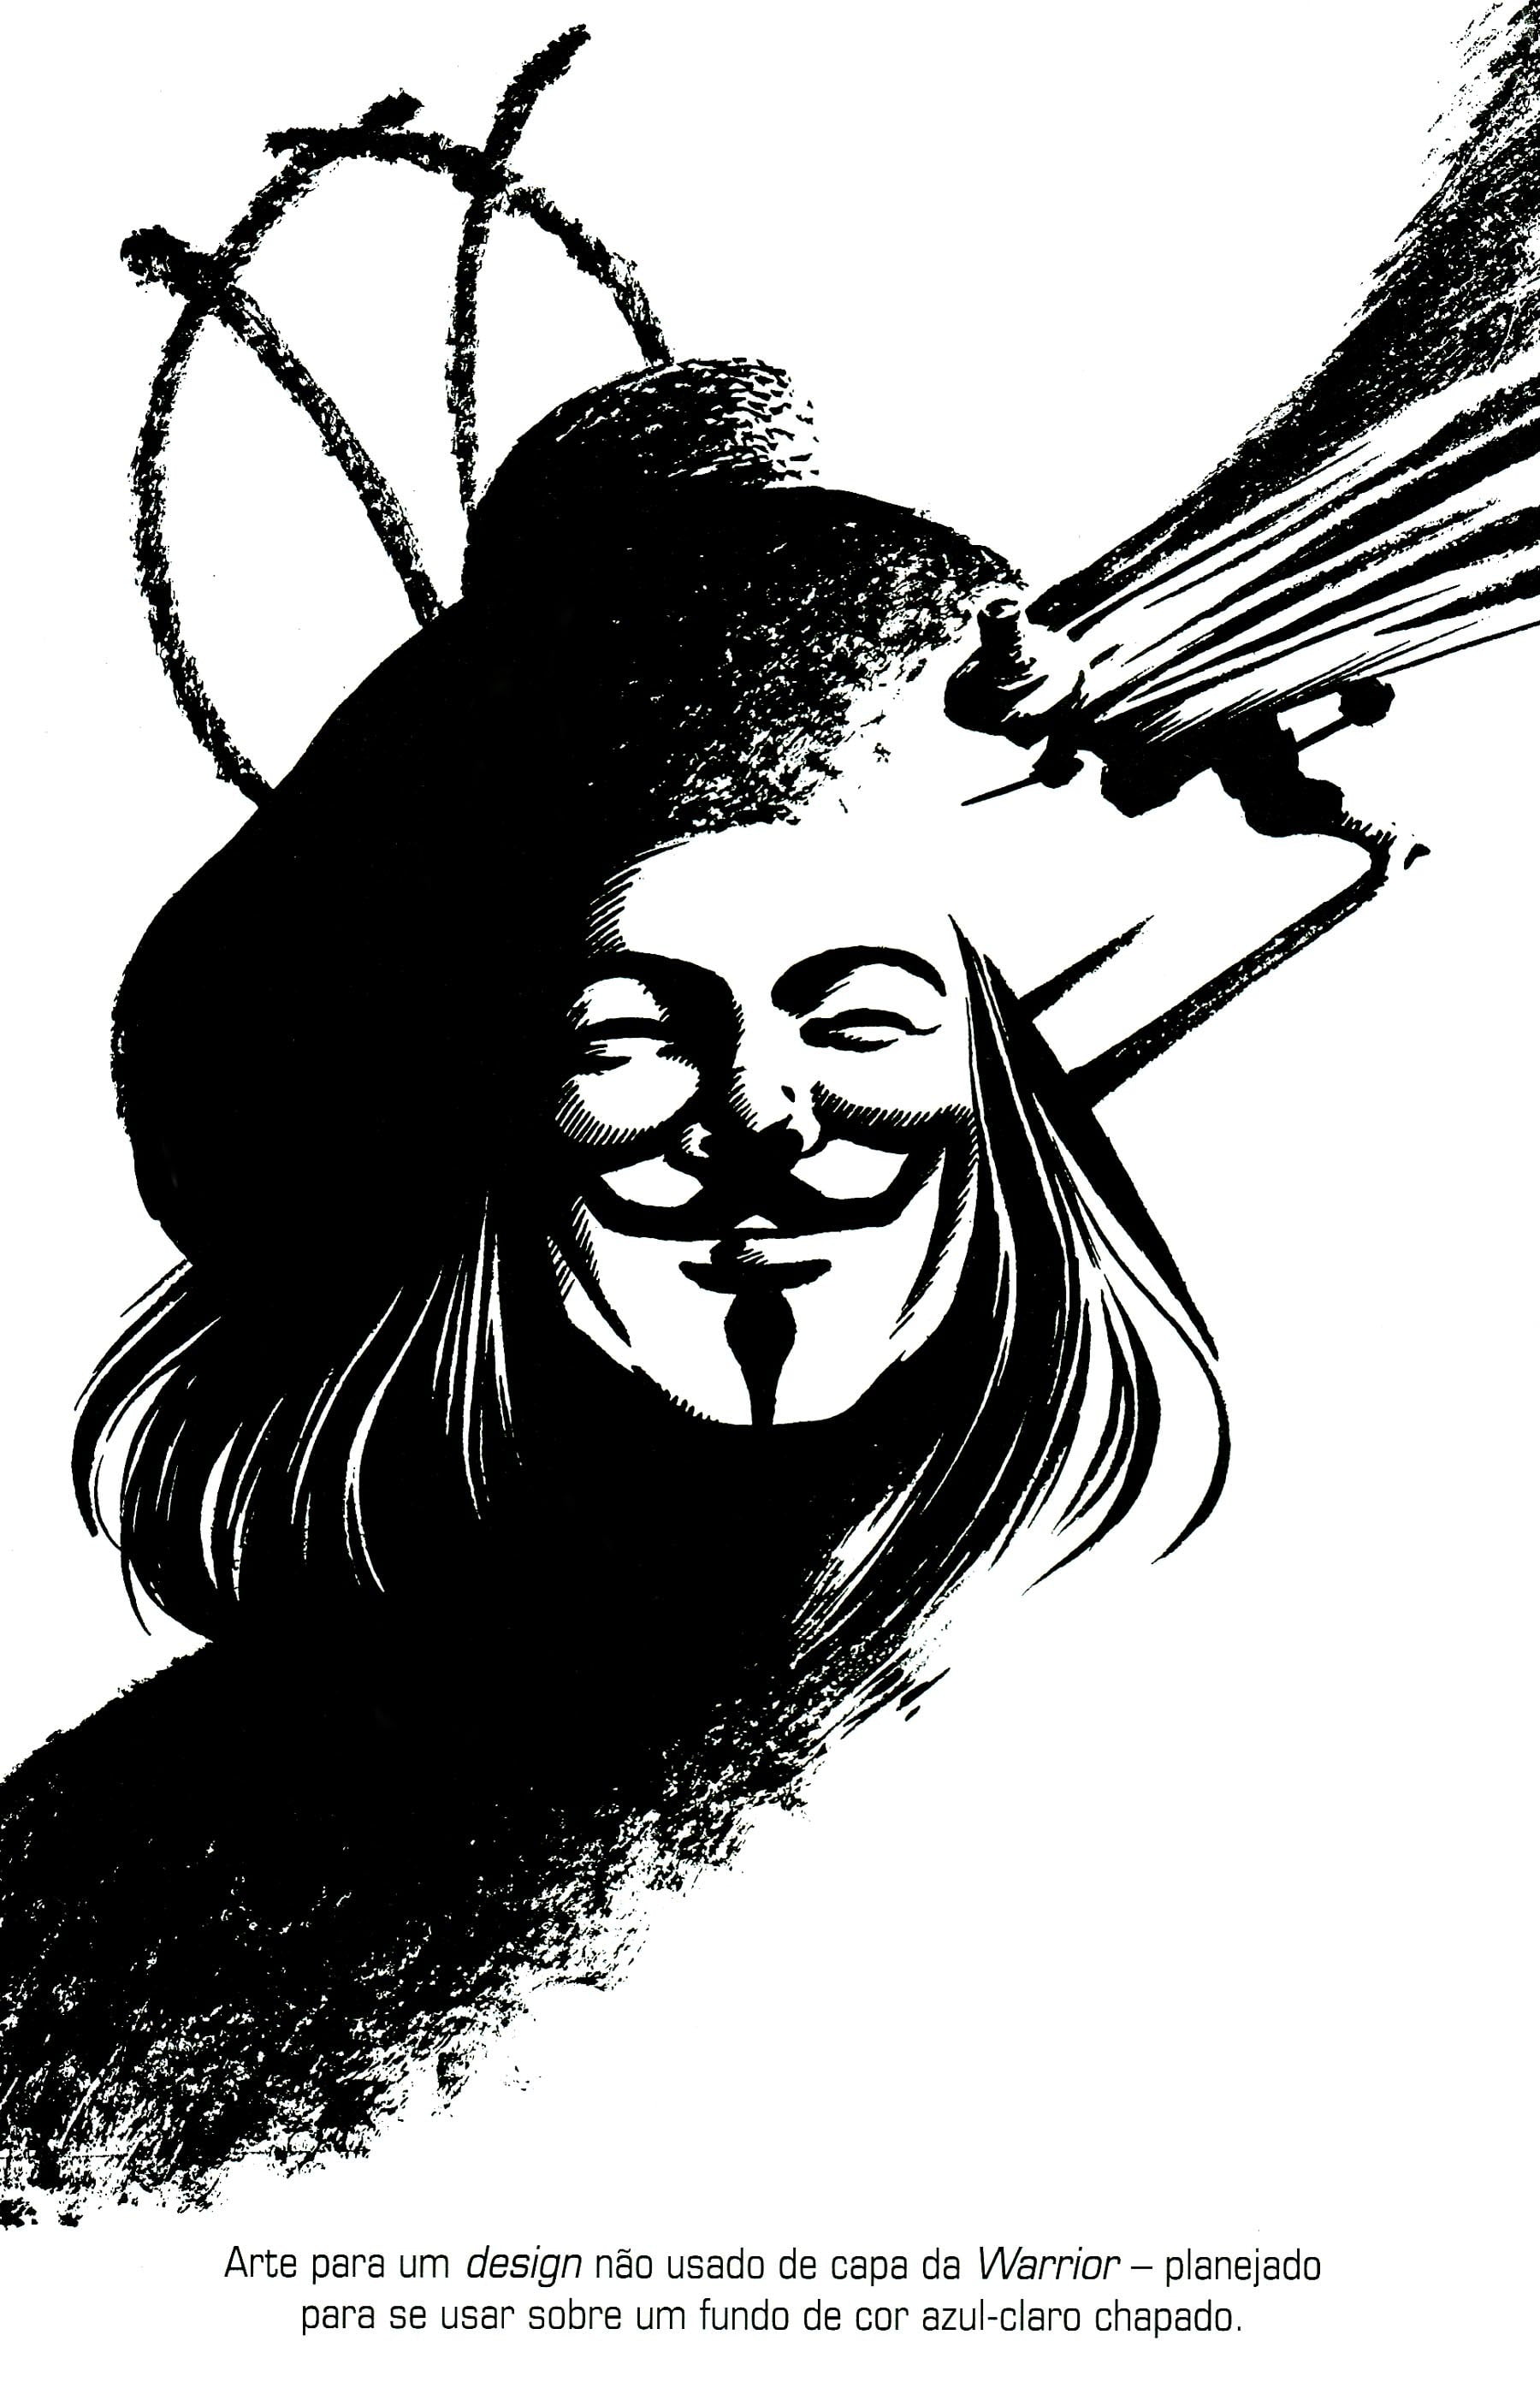 Fawkes Guy poster, David Lloyd, Alan Moore, V for Vendetta, V